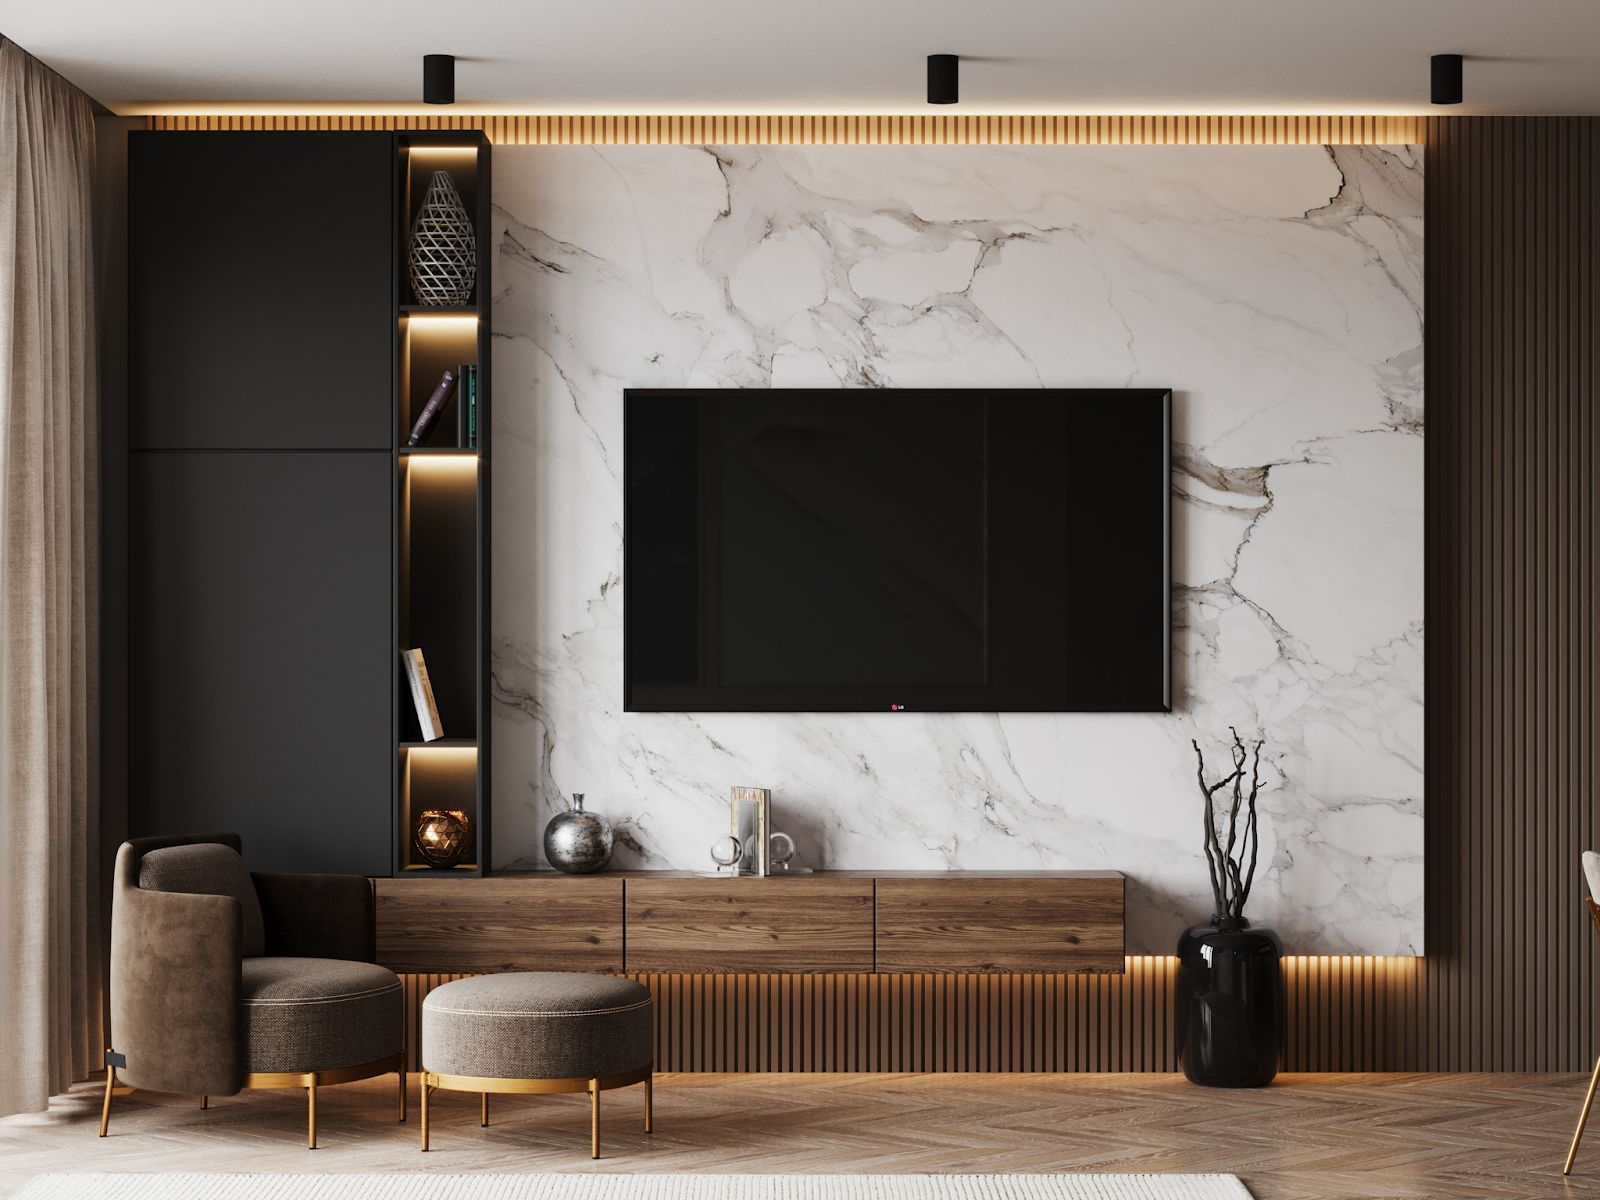 Nord Slat Panels in a Bedroom, Kitchen, or Living Room